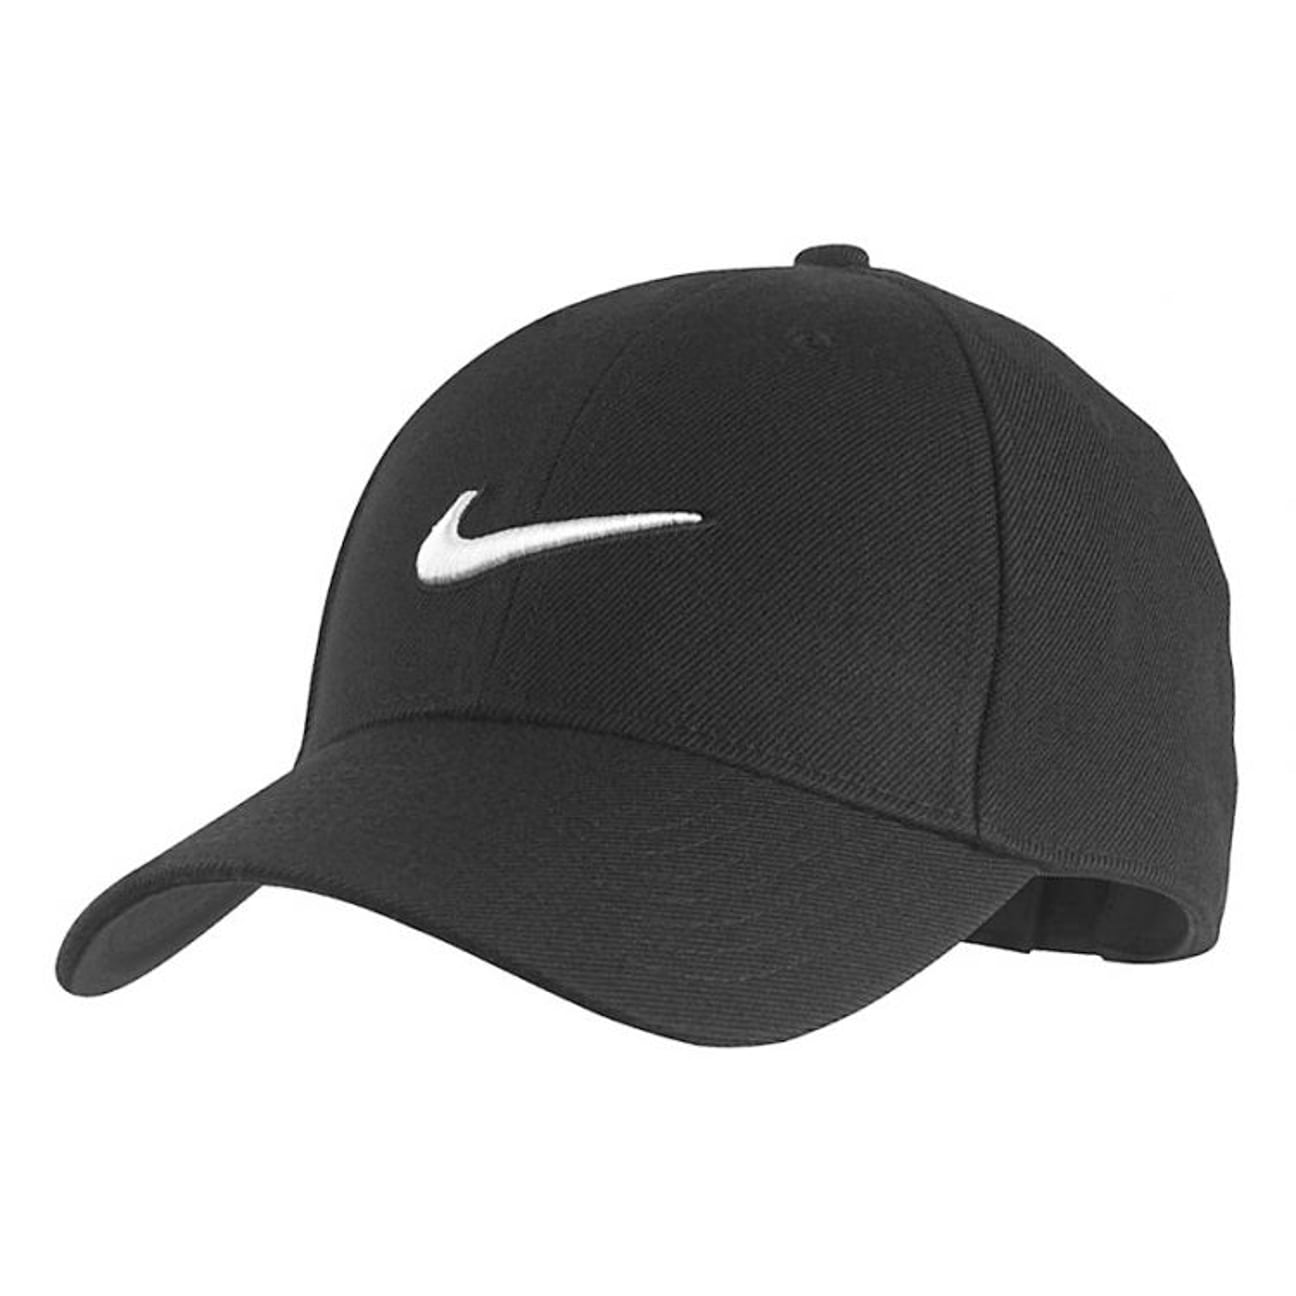 Structured Swoosh Cap by Nike, EUR 14,95 --> Hats, caps & beanies shop ...